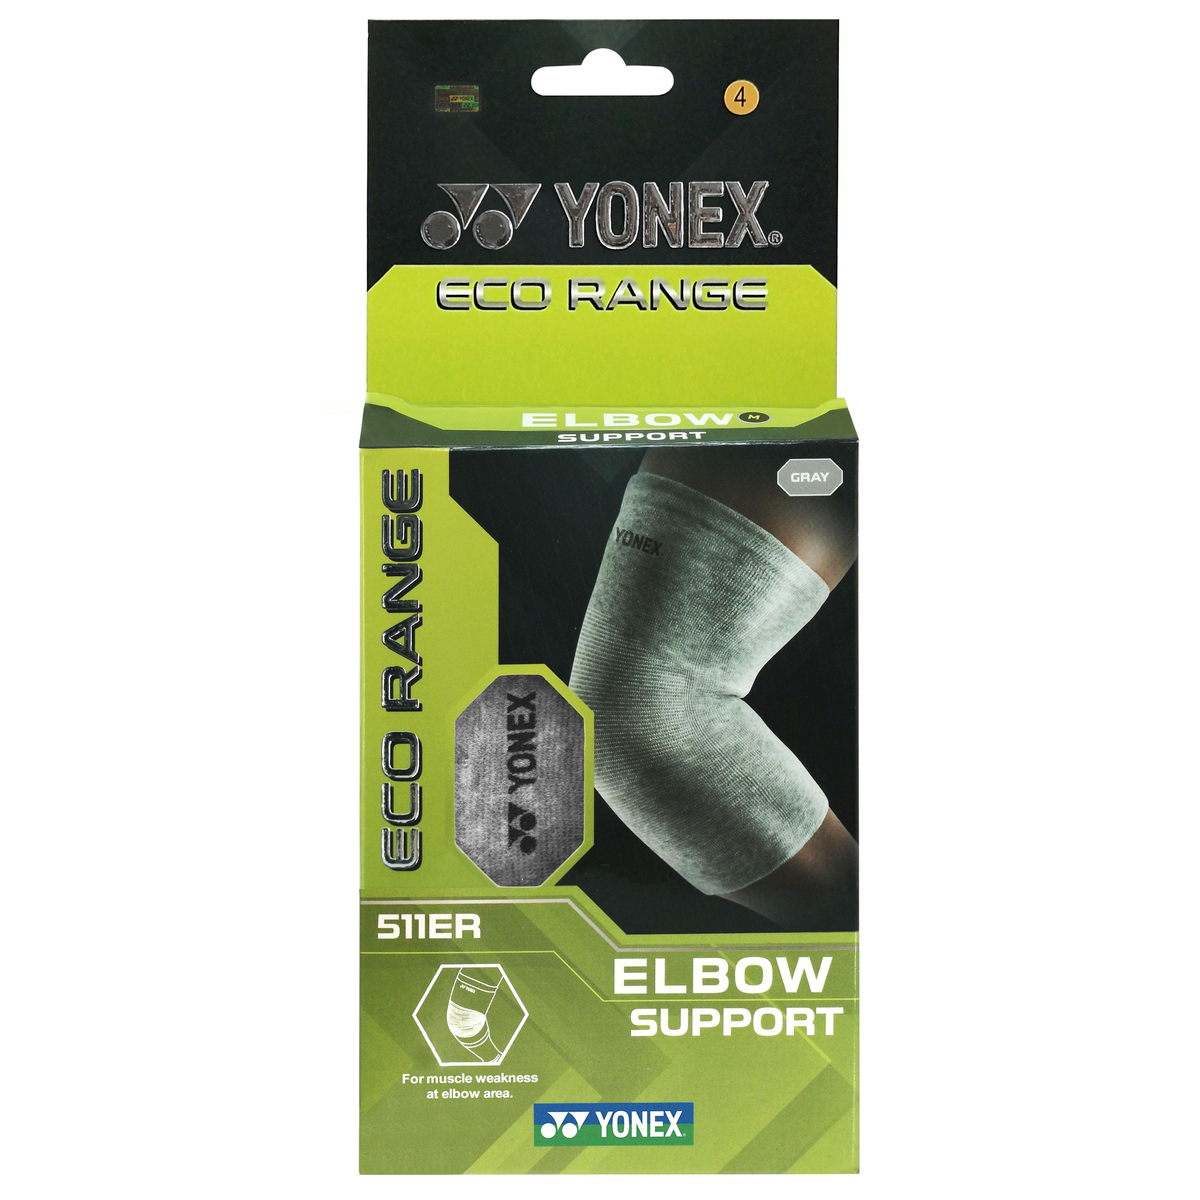 Yonex Elbow Support 511ER L/Grey